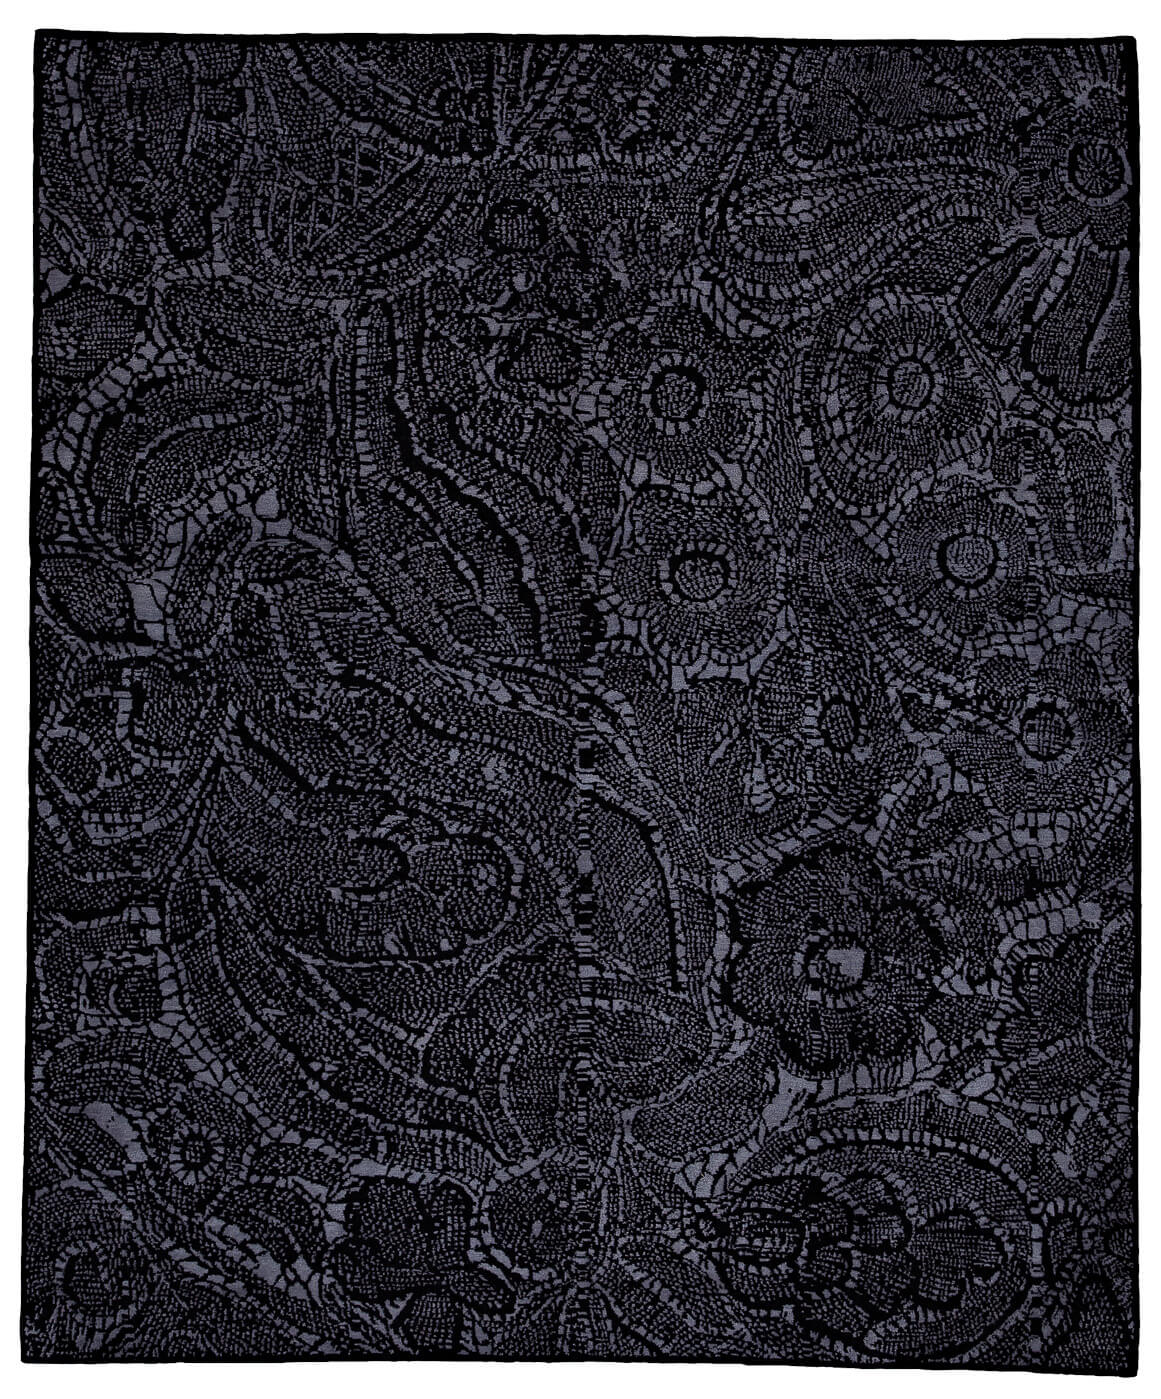 Ковер Lace черный из коллекции Яна Ката в стиле модерн